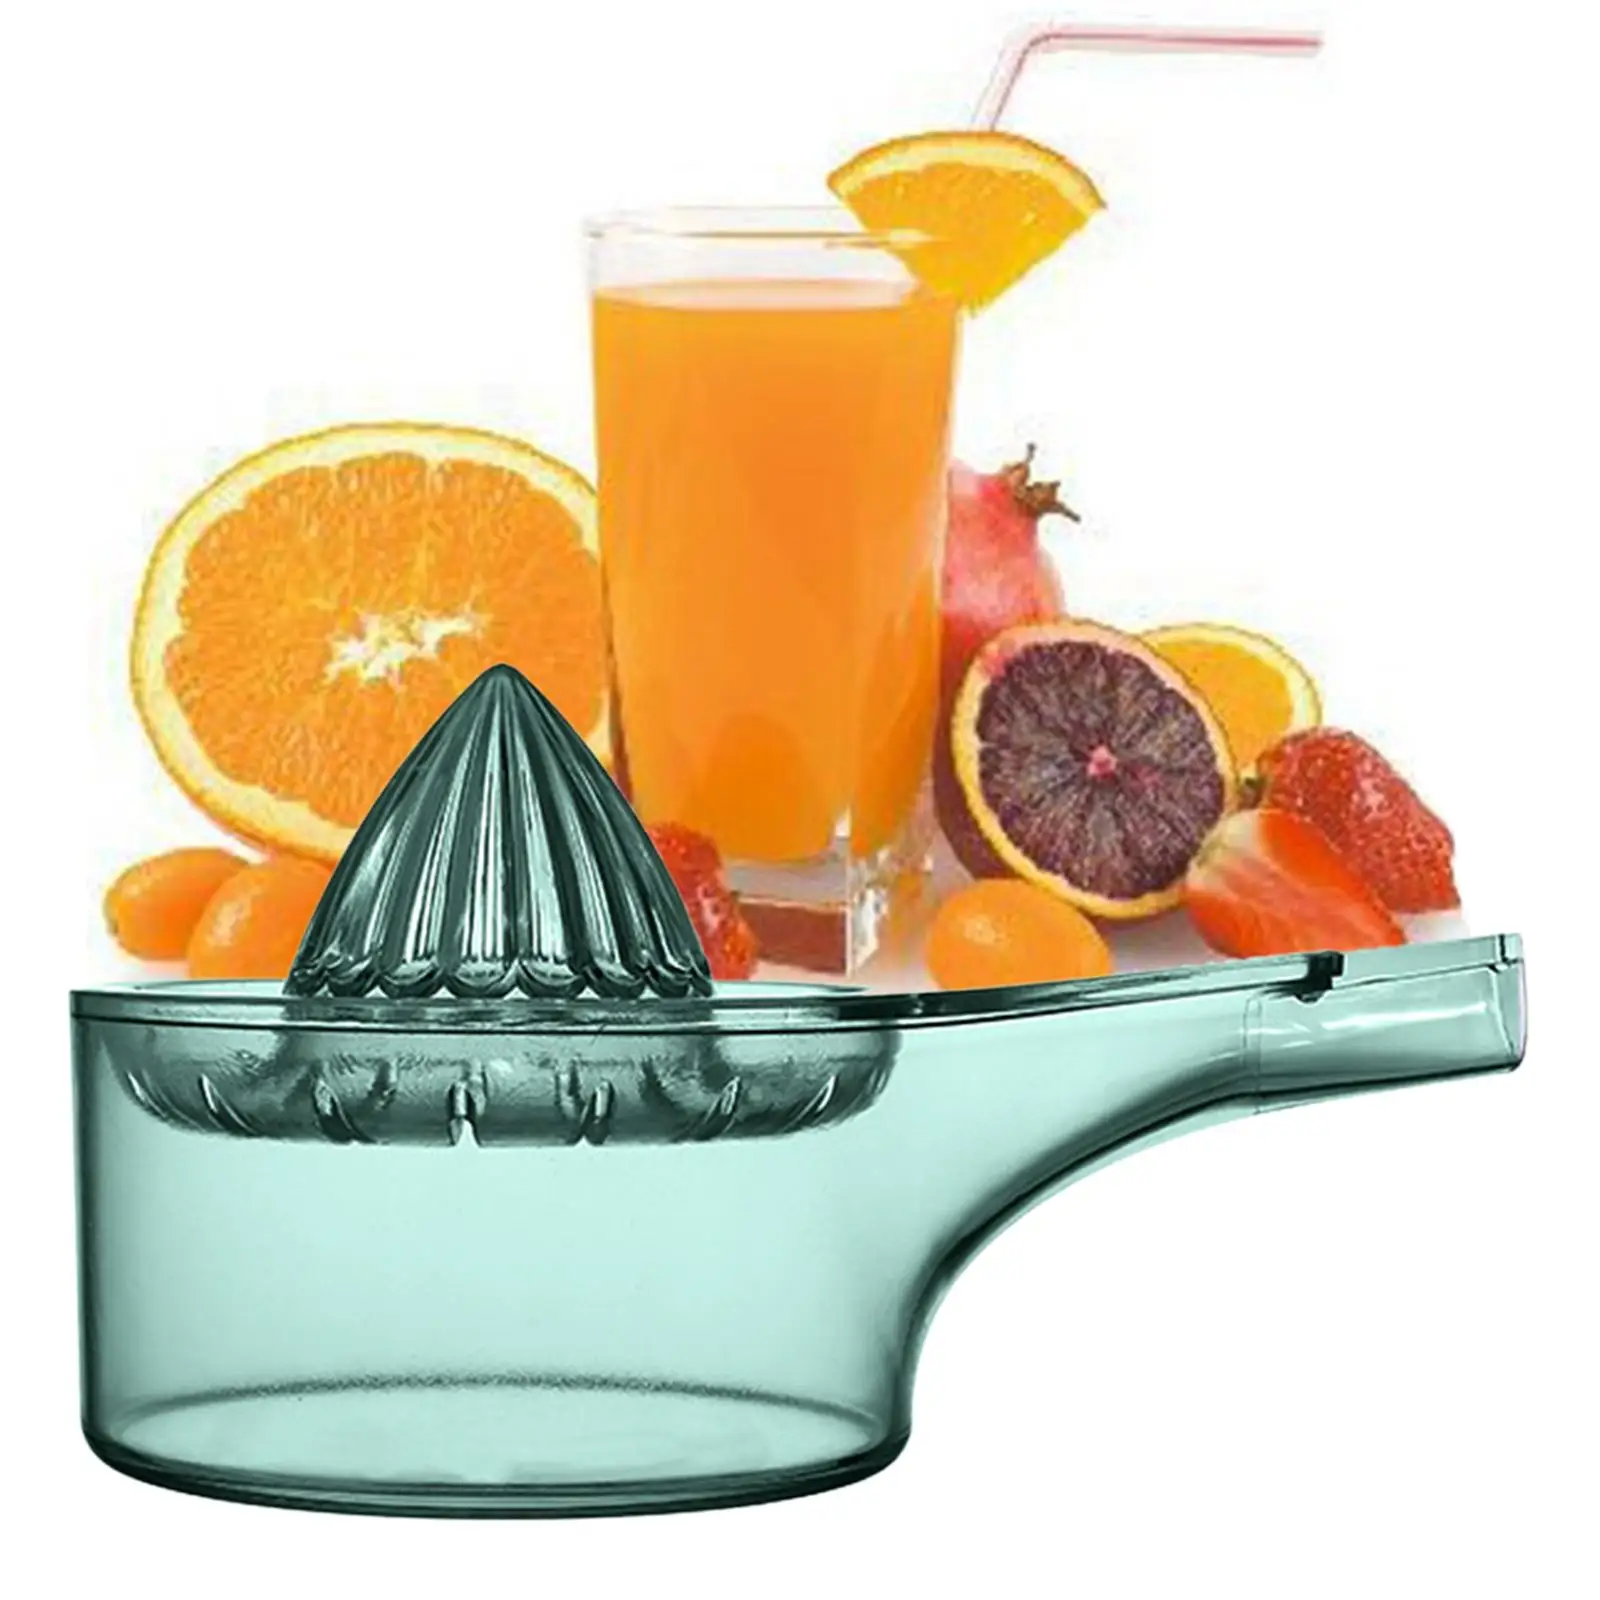 Citrus Manual Juicer Lemon Orange Lime Juicer 21Cmx12cm , 12 Tooth Reamer to Extract Maximum Juice Transparent Body Easy Clean